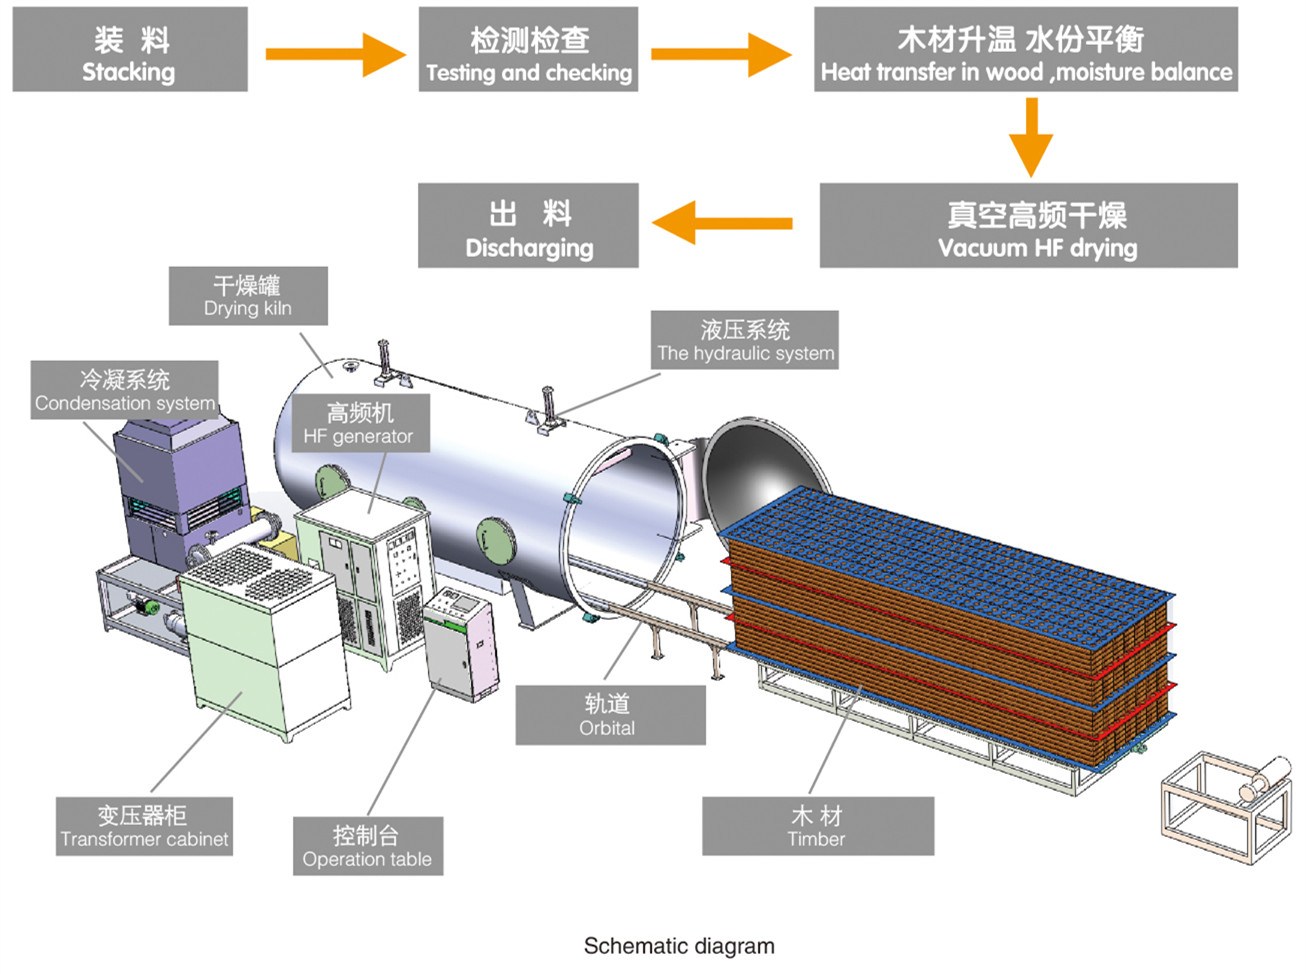 HF dryer operation process